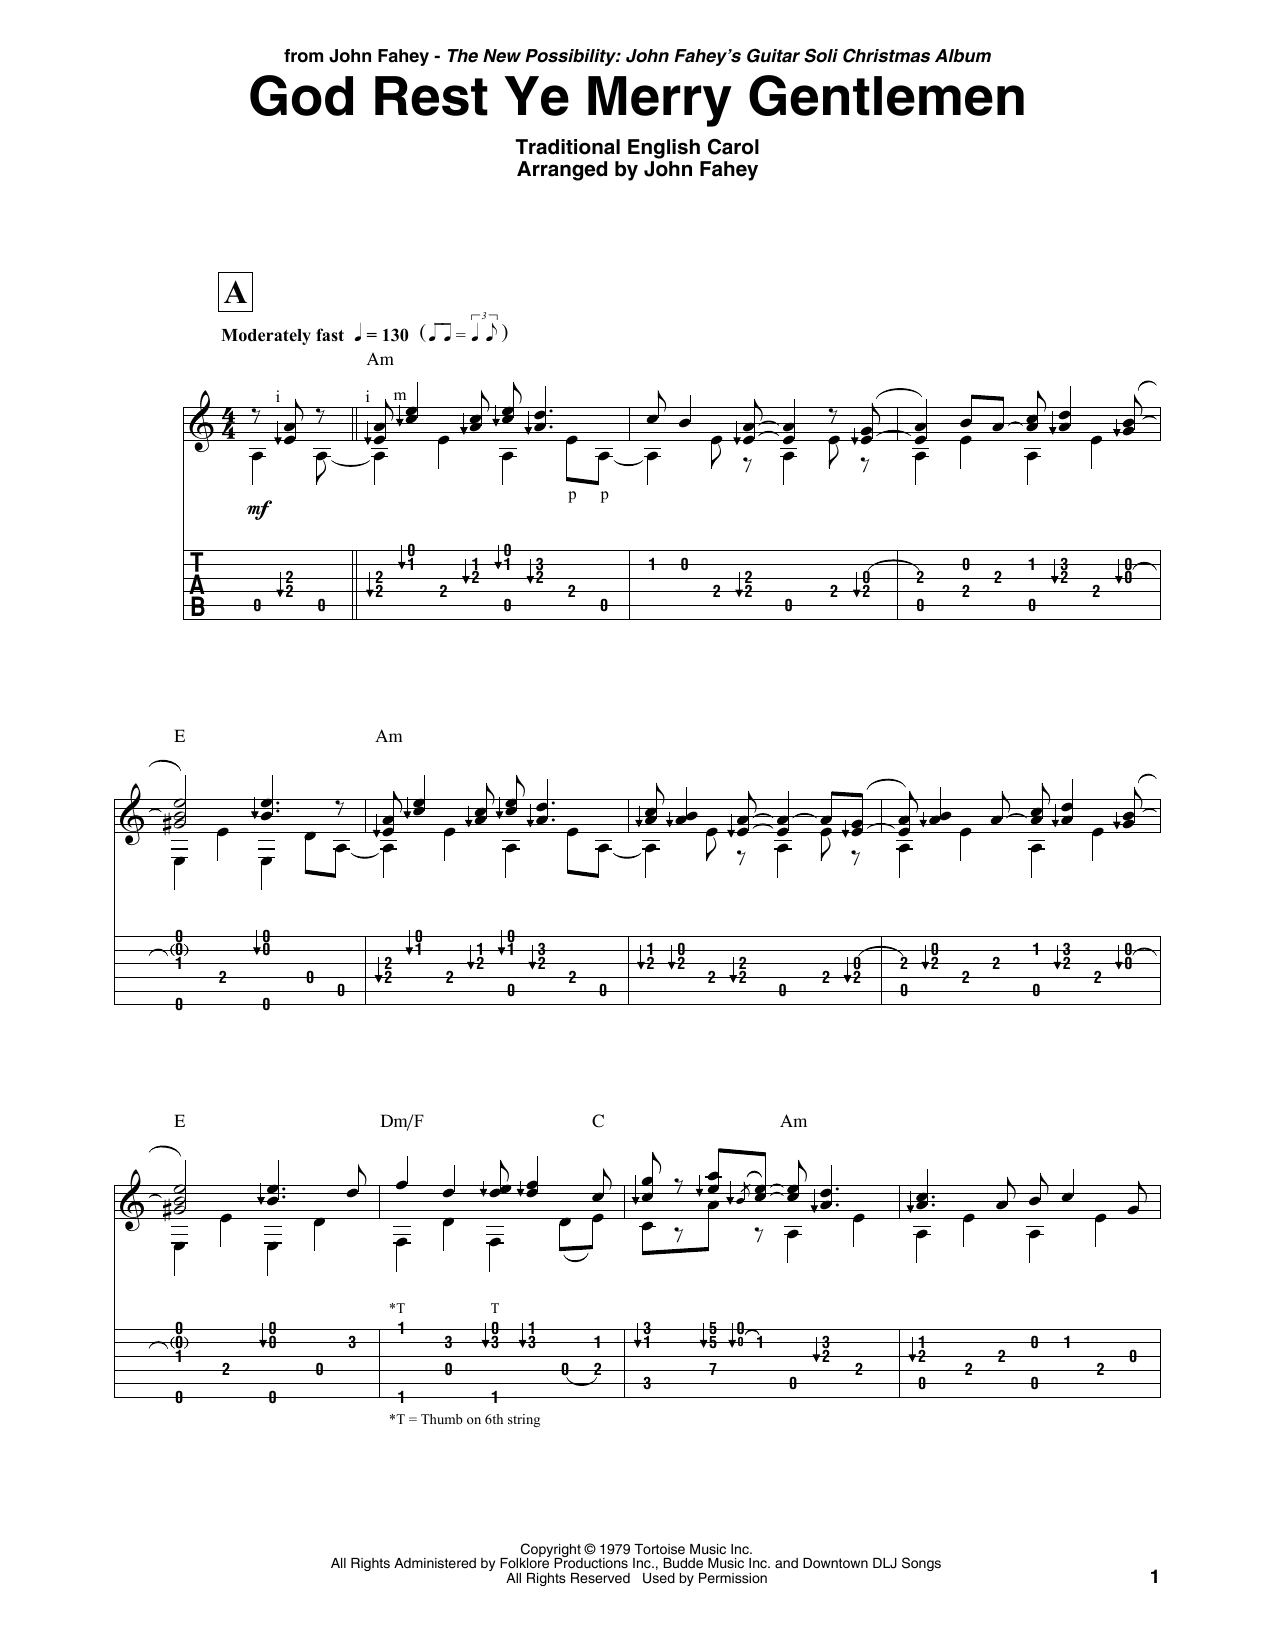 John Fahey God Rest Ye Merry Gentlemen Sheet Music Notes & Chords for Guitar Tab - Download or Print PDF